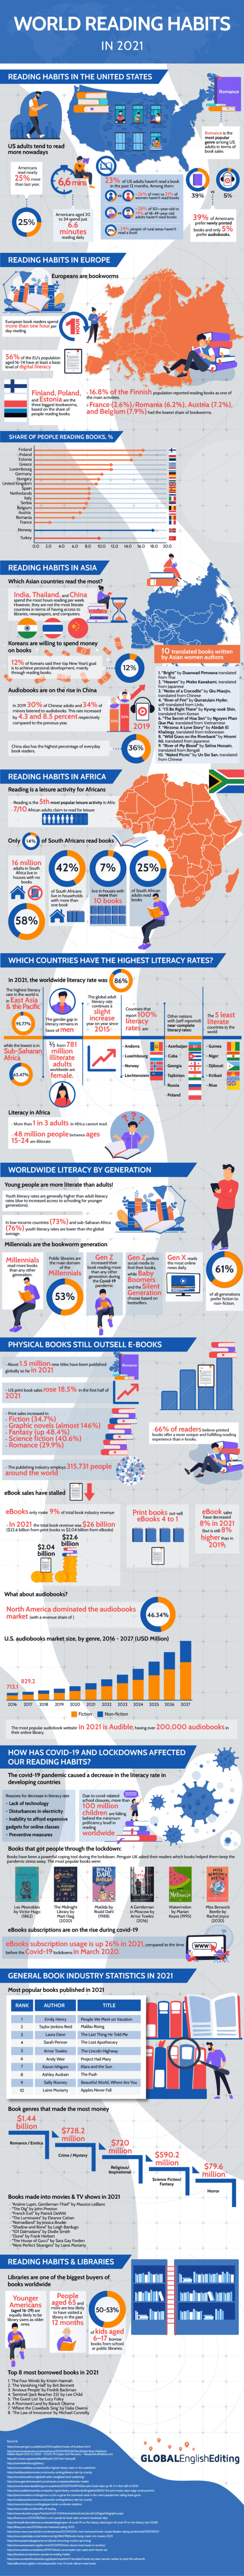 World Reading Habits infographic